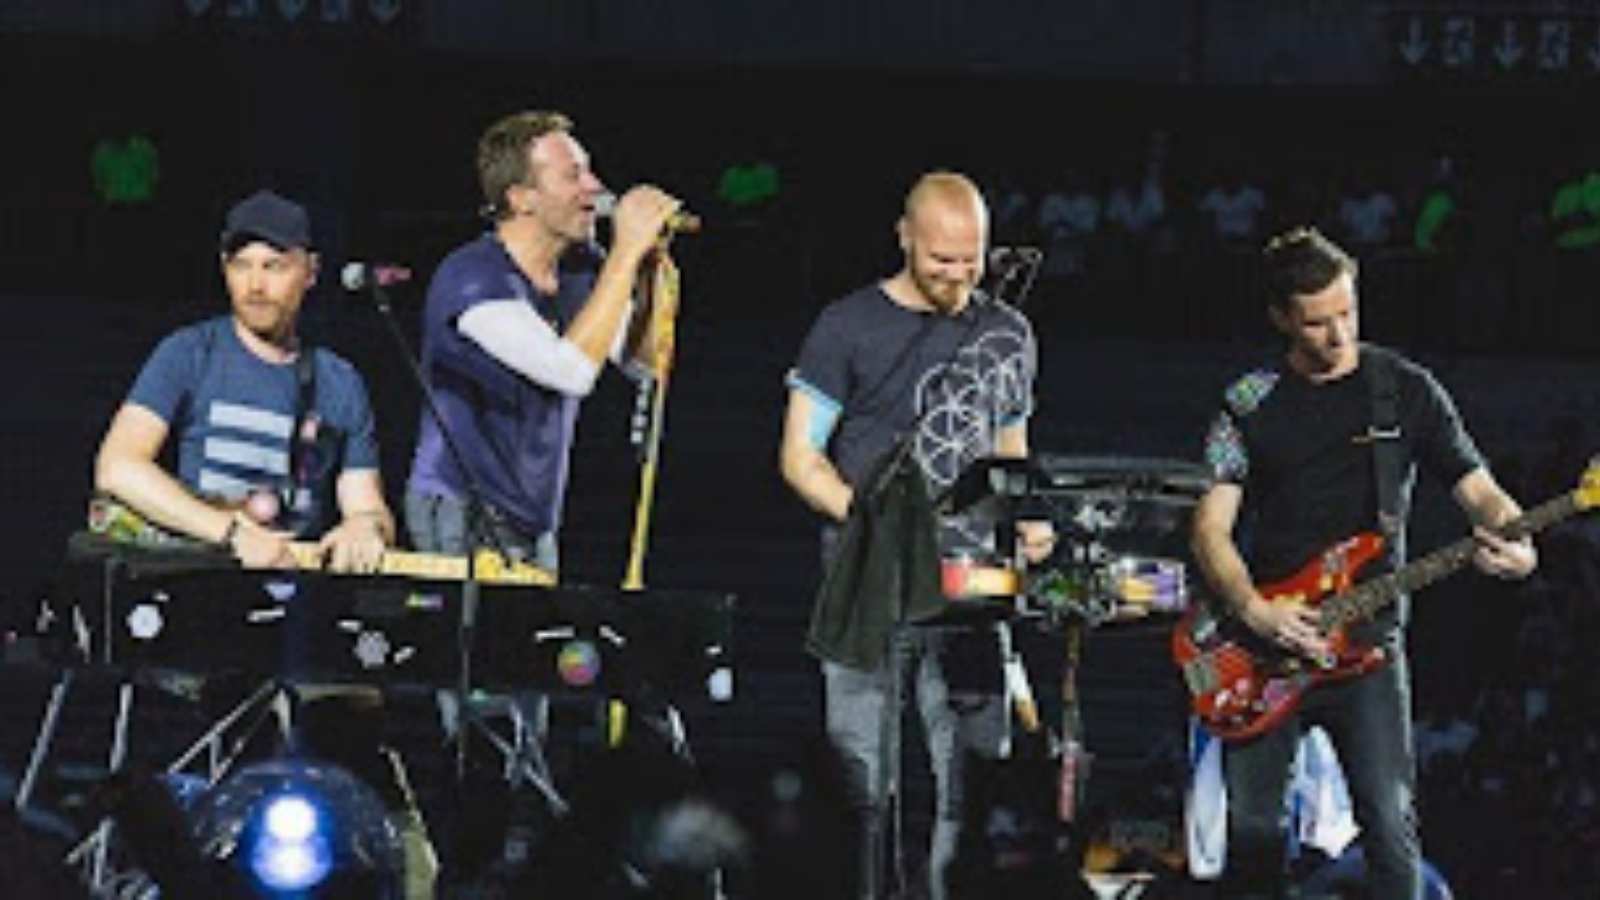 Coldplay at a concert